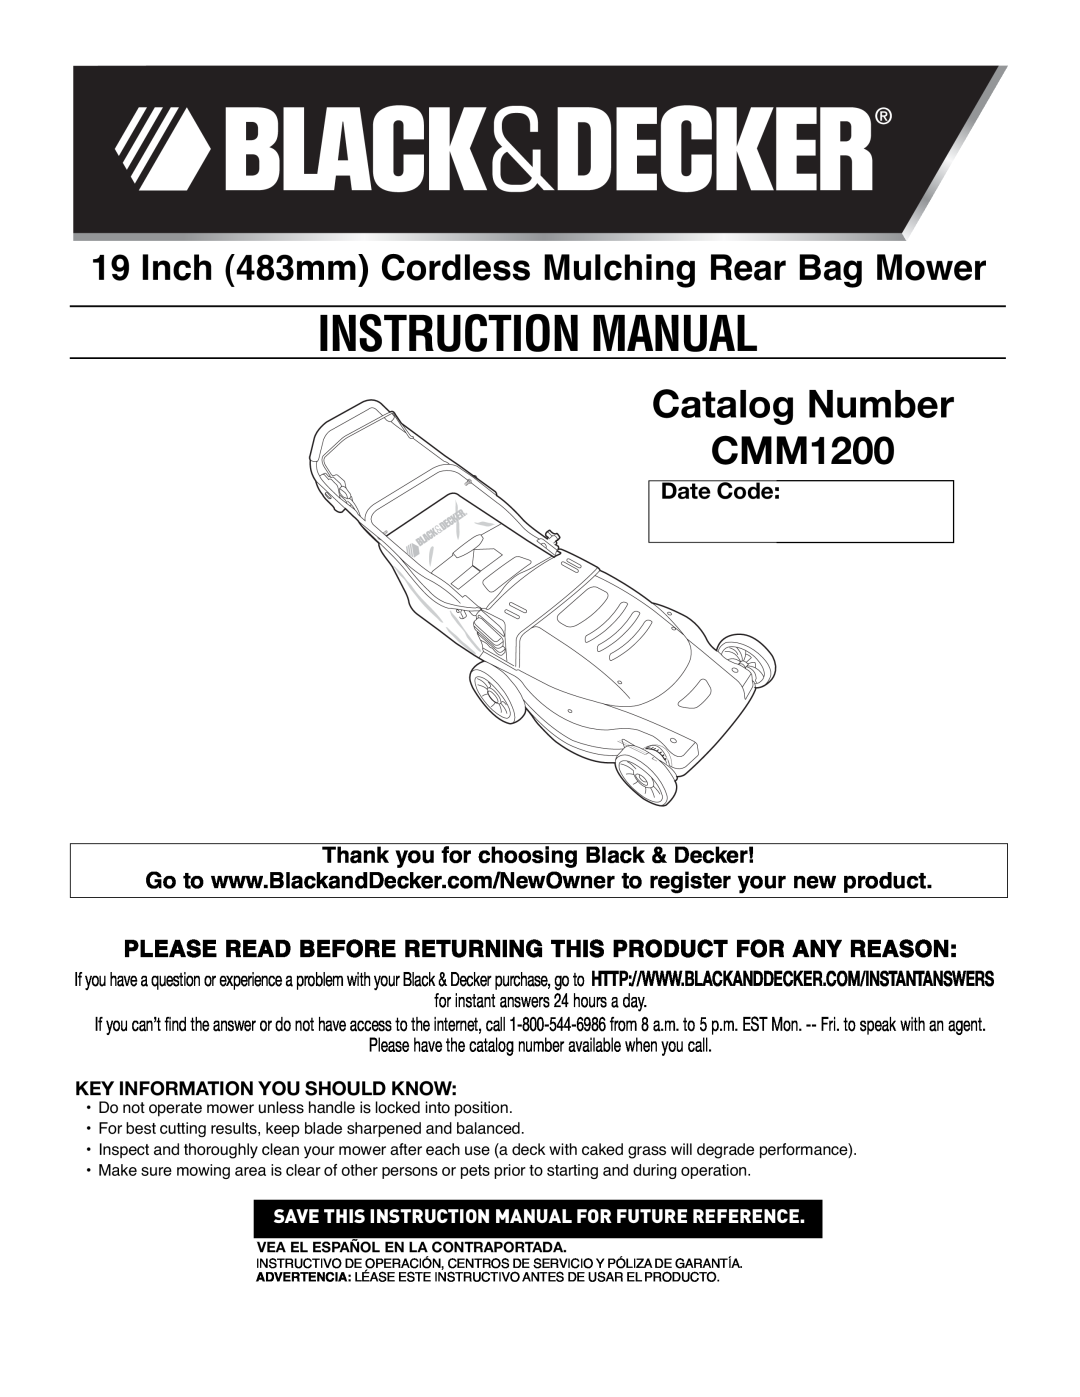 Black & Decker 90541667 instruction manual Catalog Number CMM1200, Inch 483mm Cordless Mulching Rear Bag Mower, Date Code 